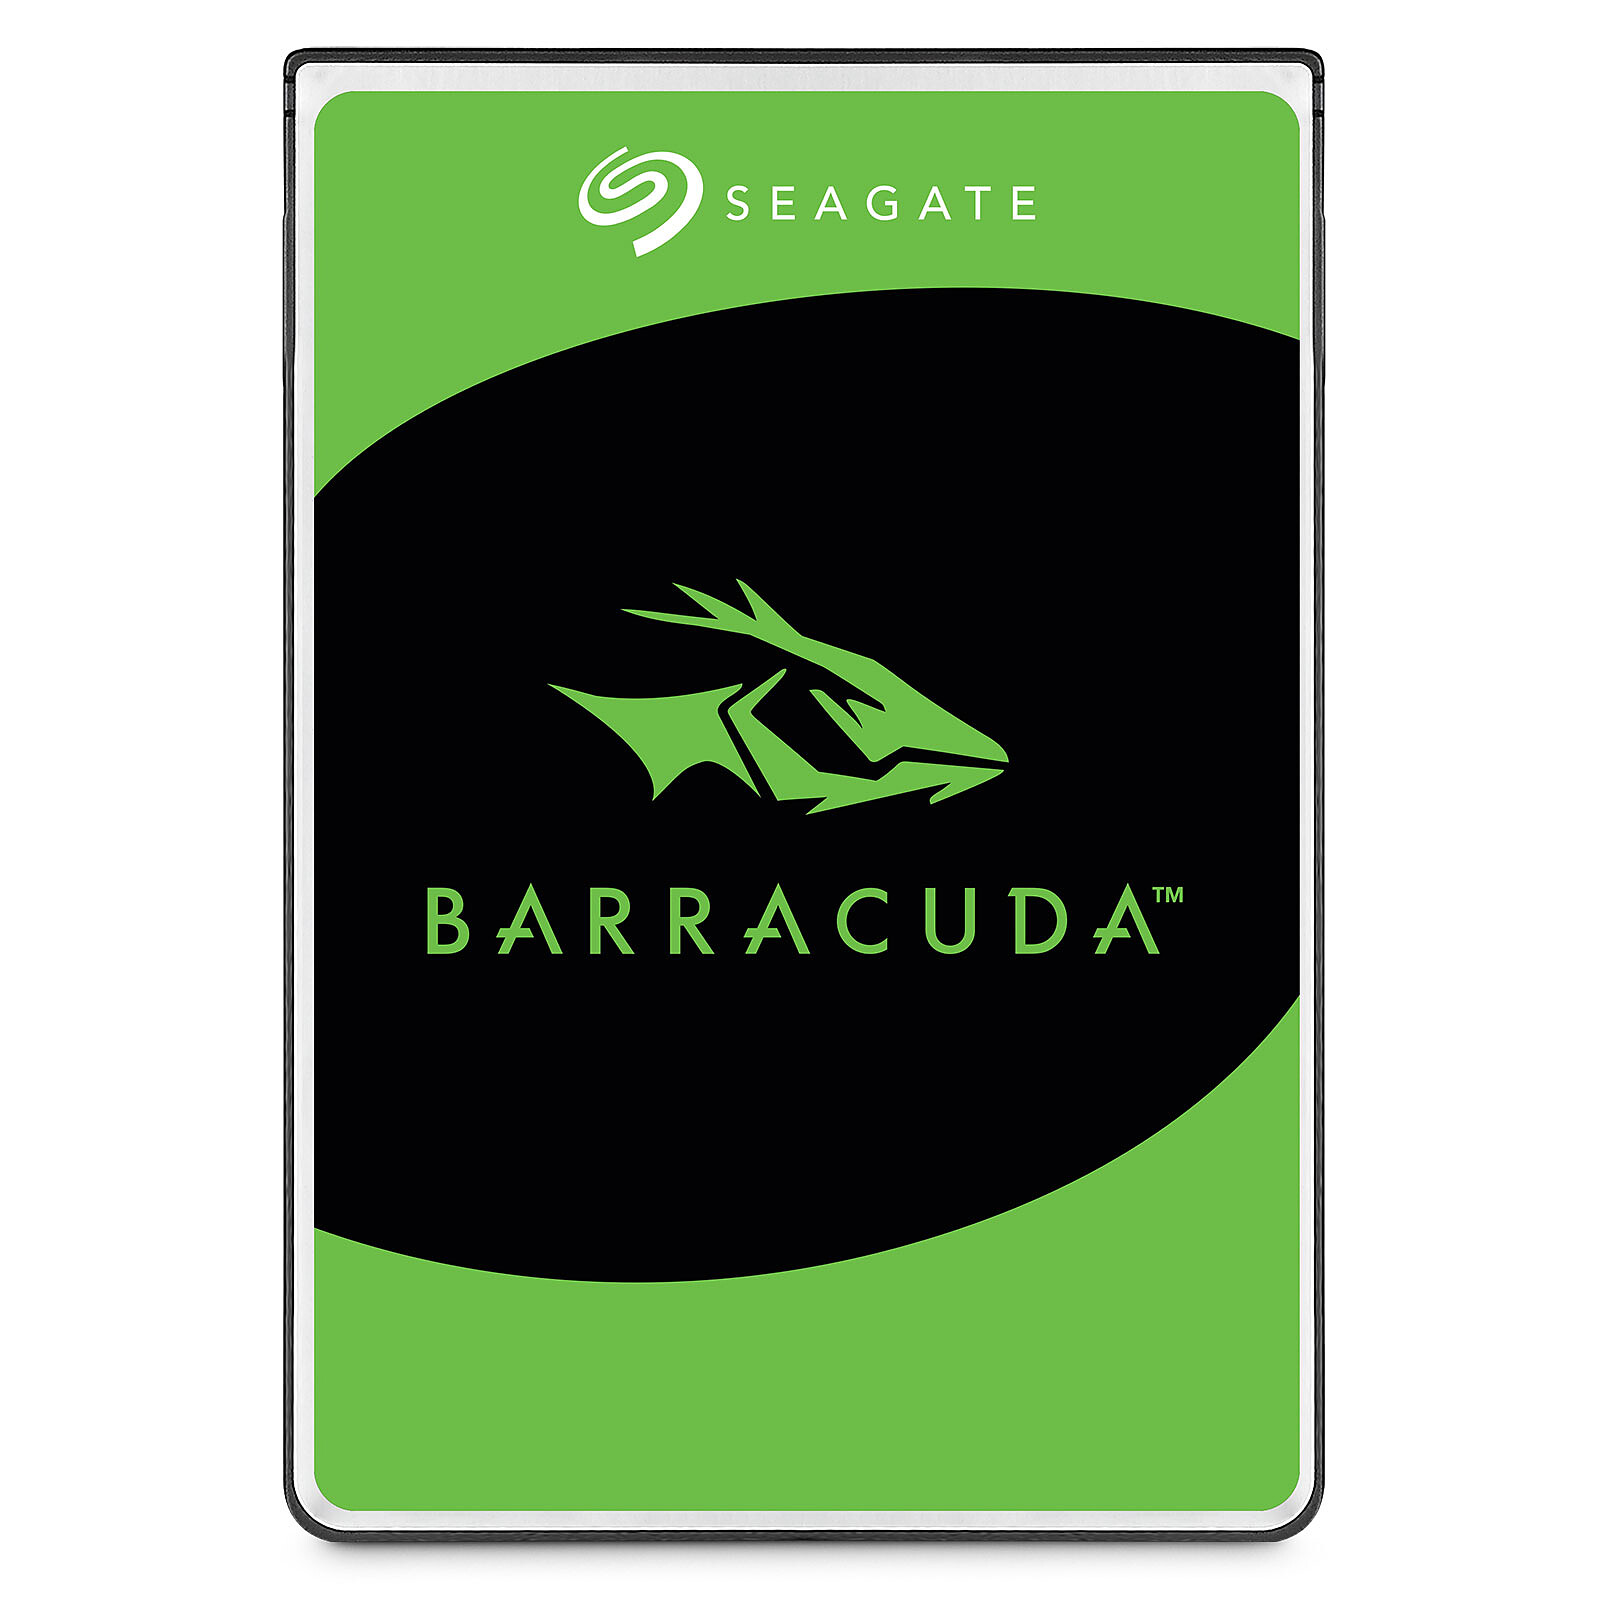 BarraCuda 2.5  Support Seagate US